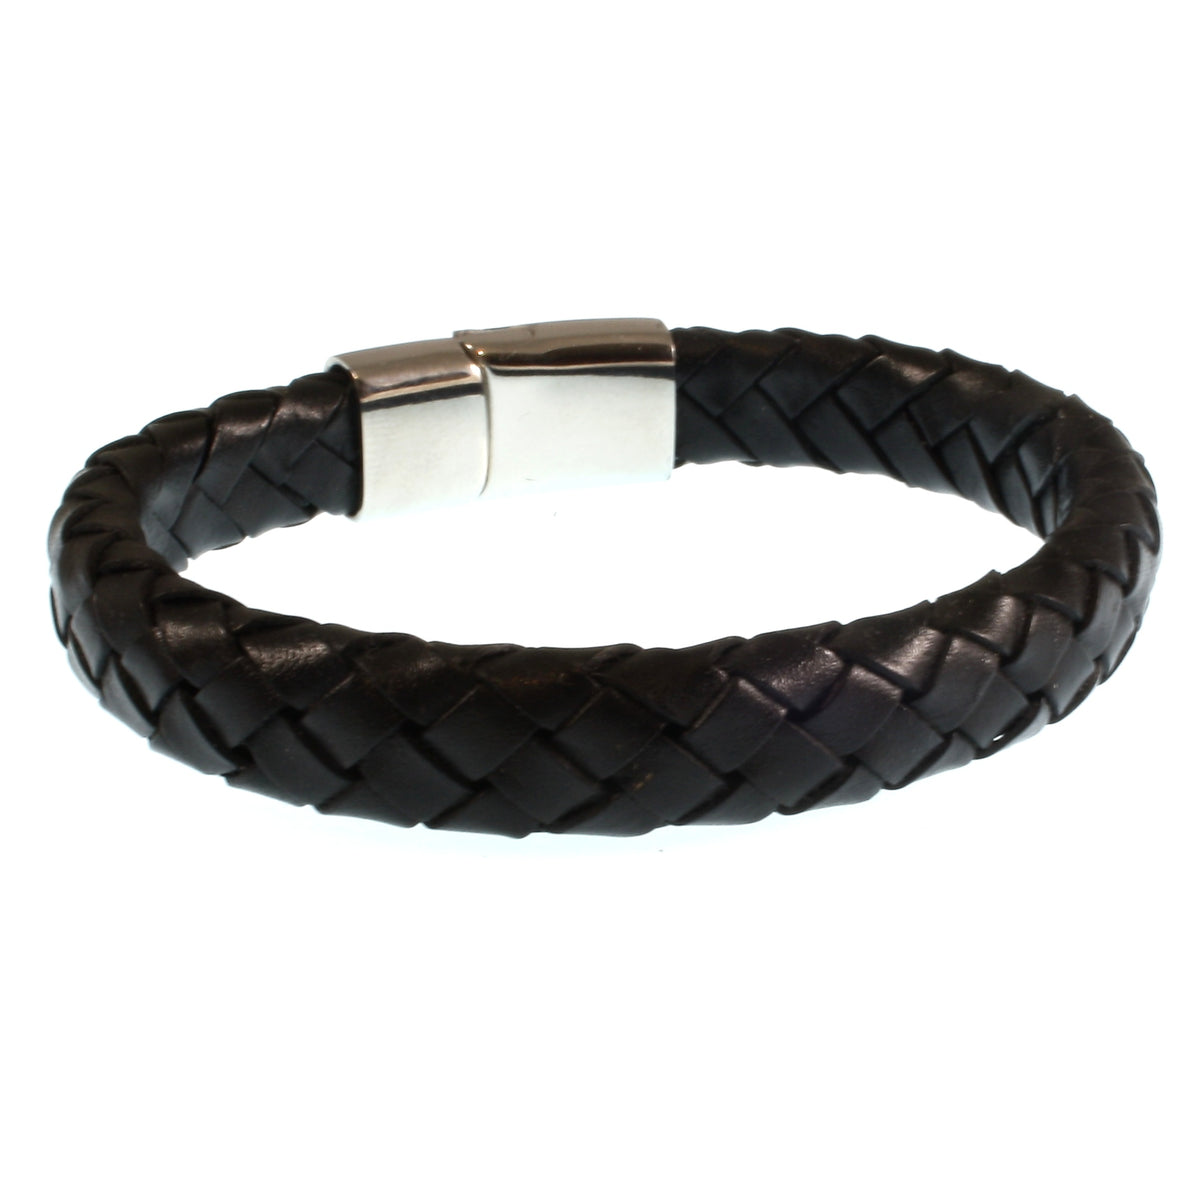 Herren-Leder-Armband-Tarifa-schwarz-geflochten-oval-Edelstahlverschluss-hinten-wavepirate-shop-ov